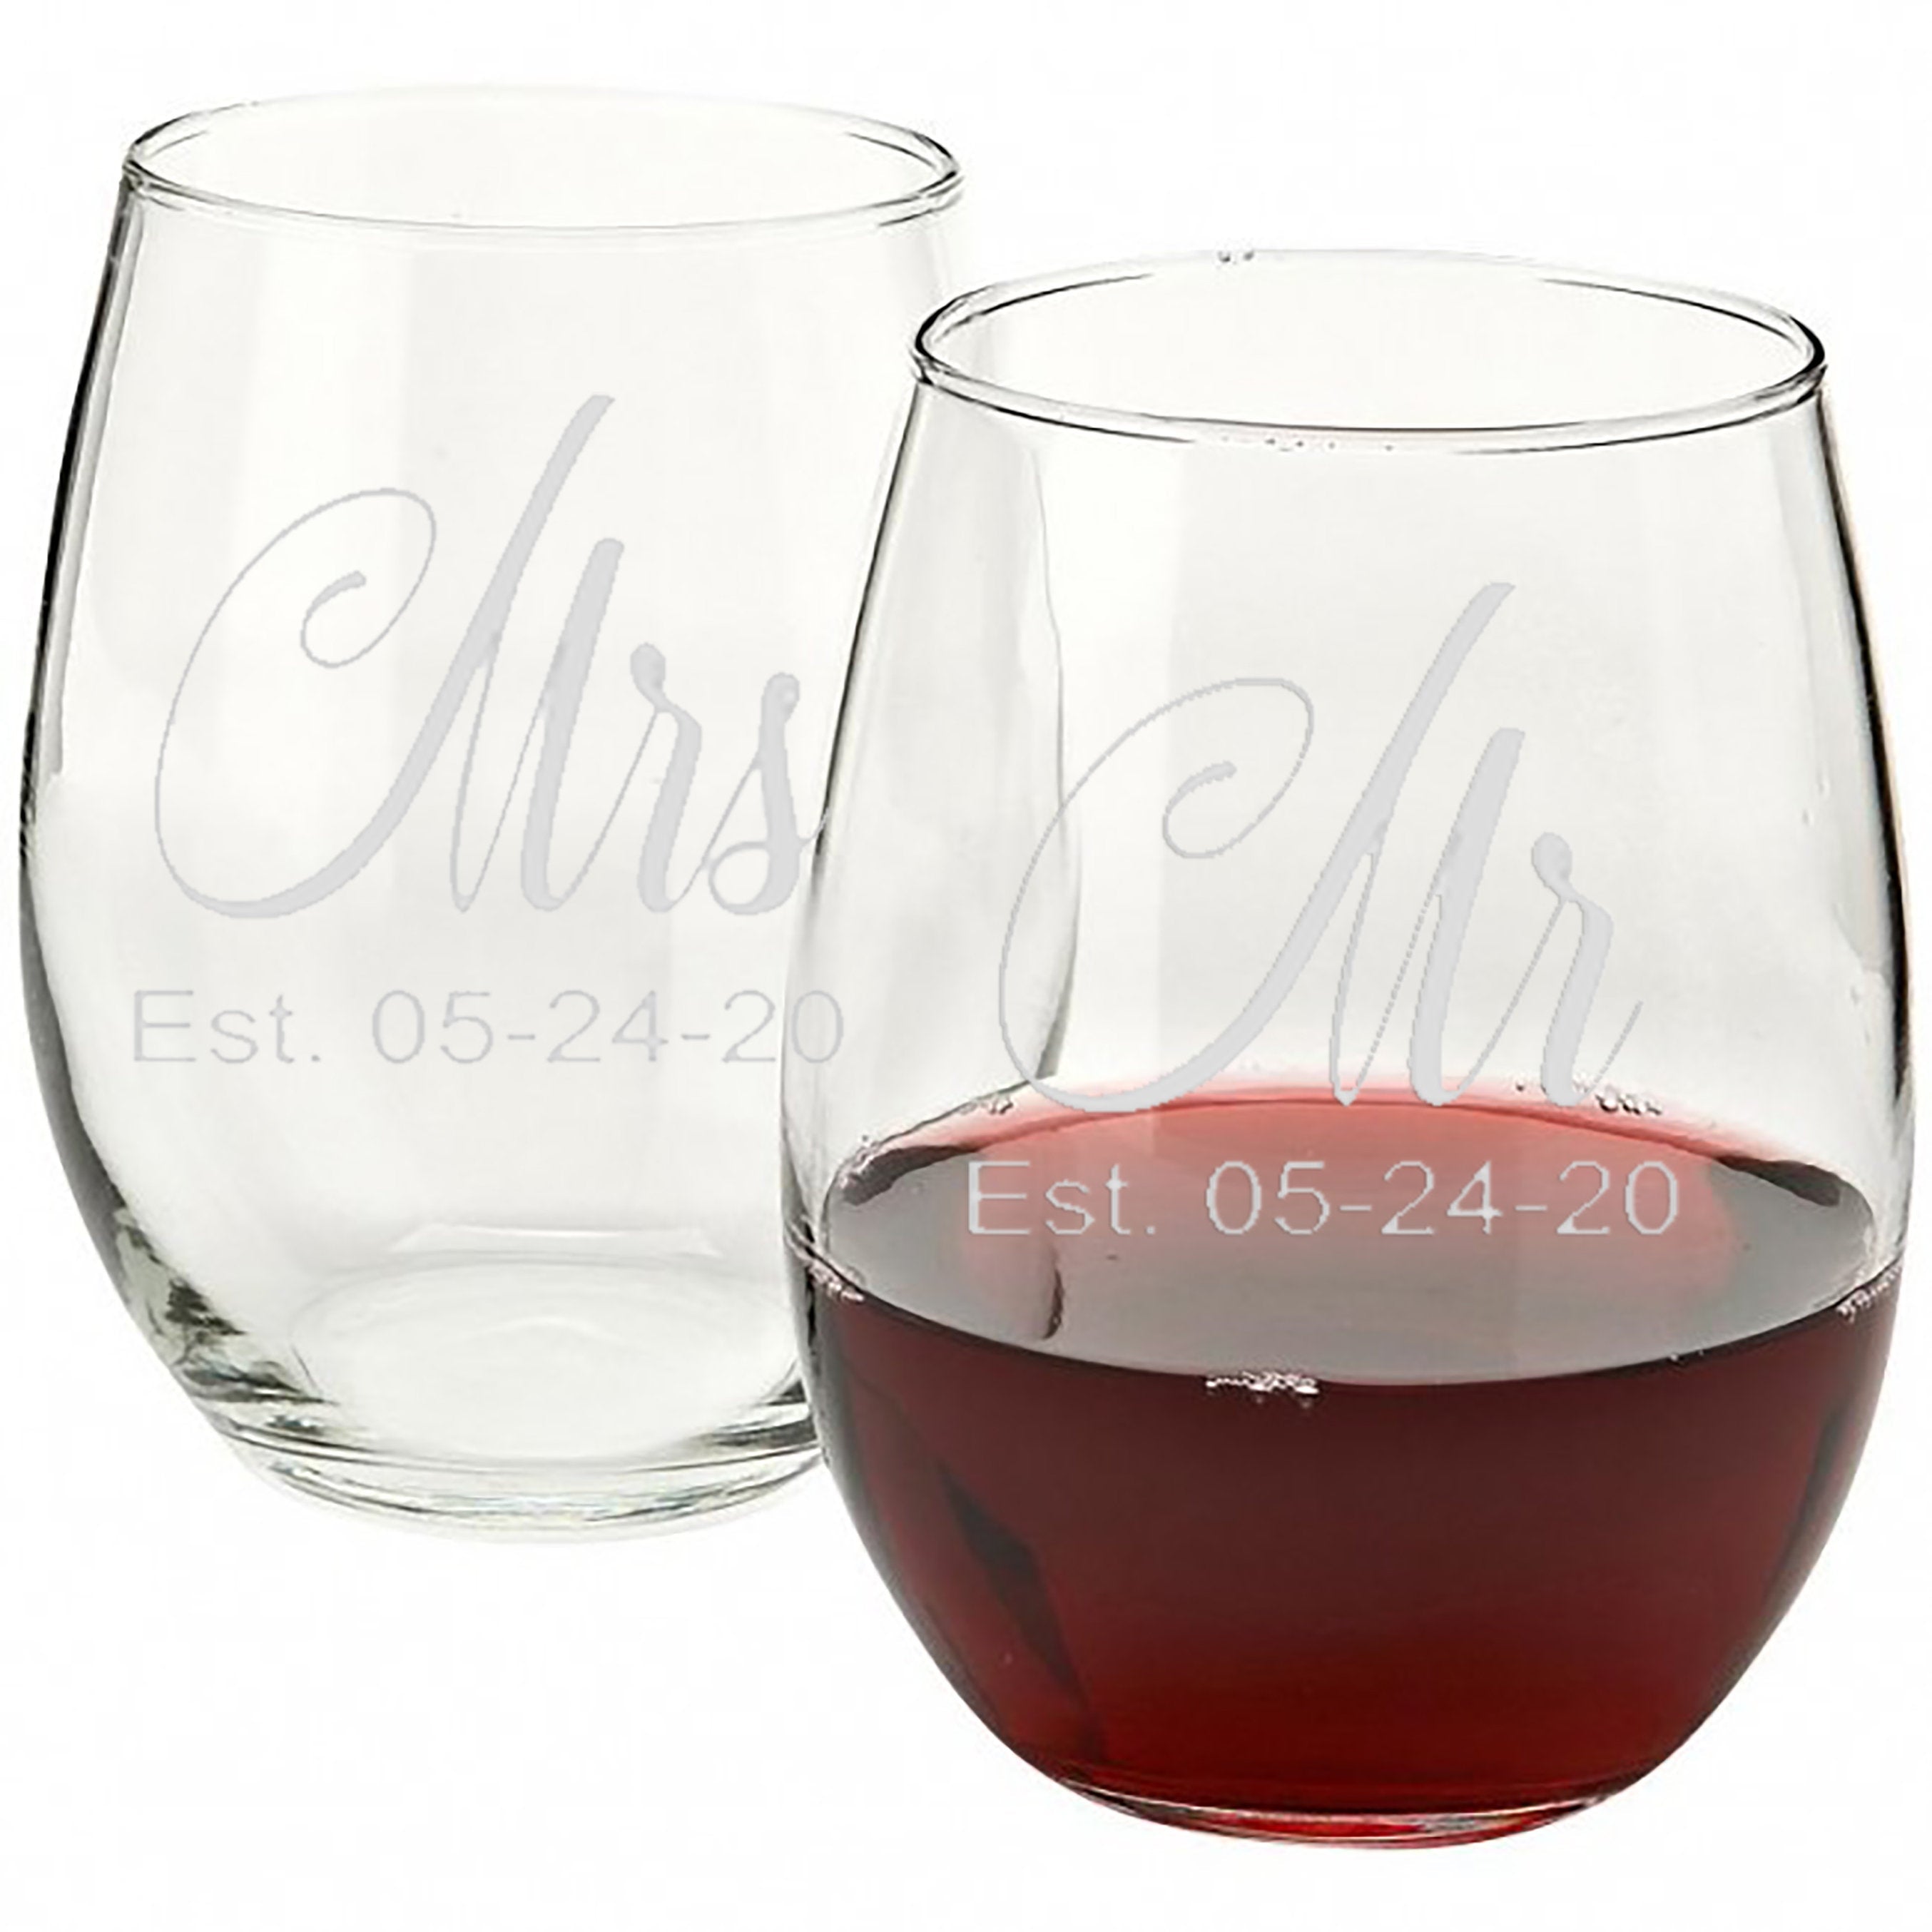 Mr Mrs Stemless Wine glass set, Mr and Mrs, Wedding glasses, Wedding Wine glasses, Mr and Mrs Gift, Mr Mrs glasses, couples wedding gift